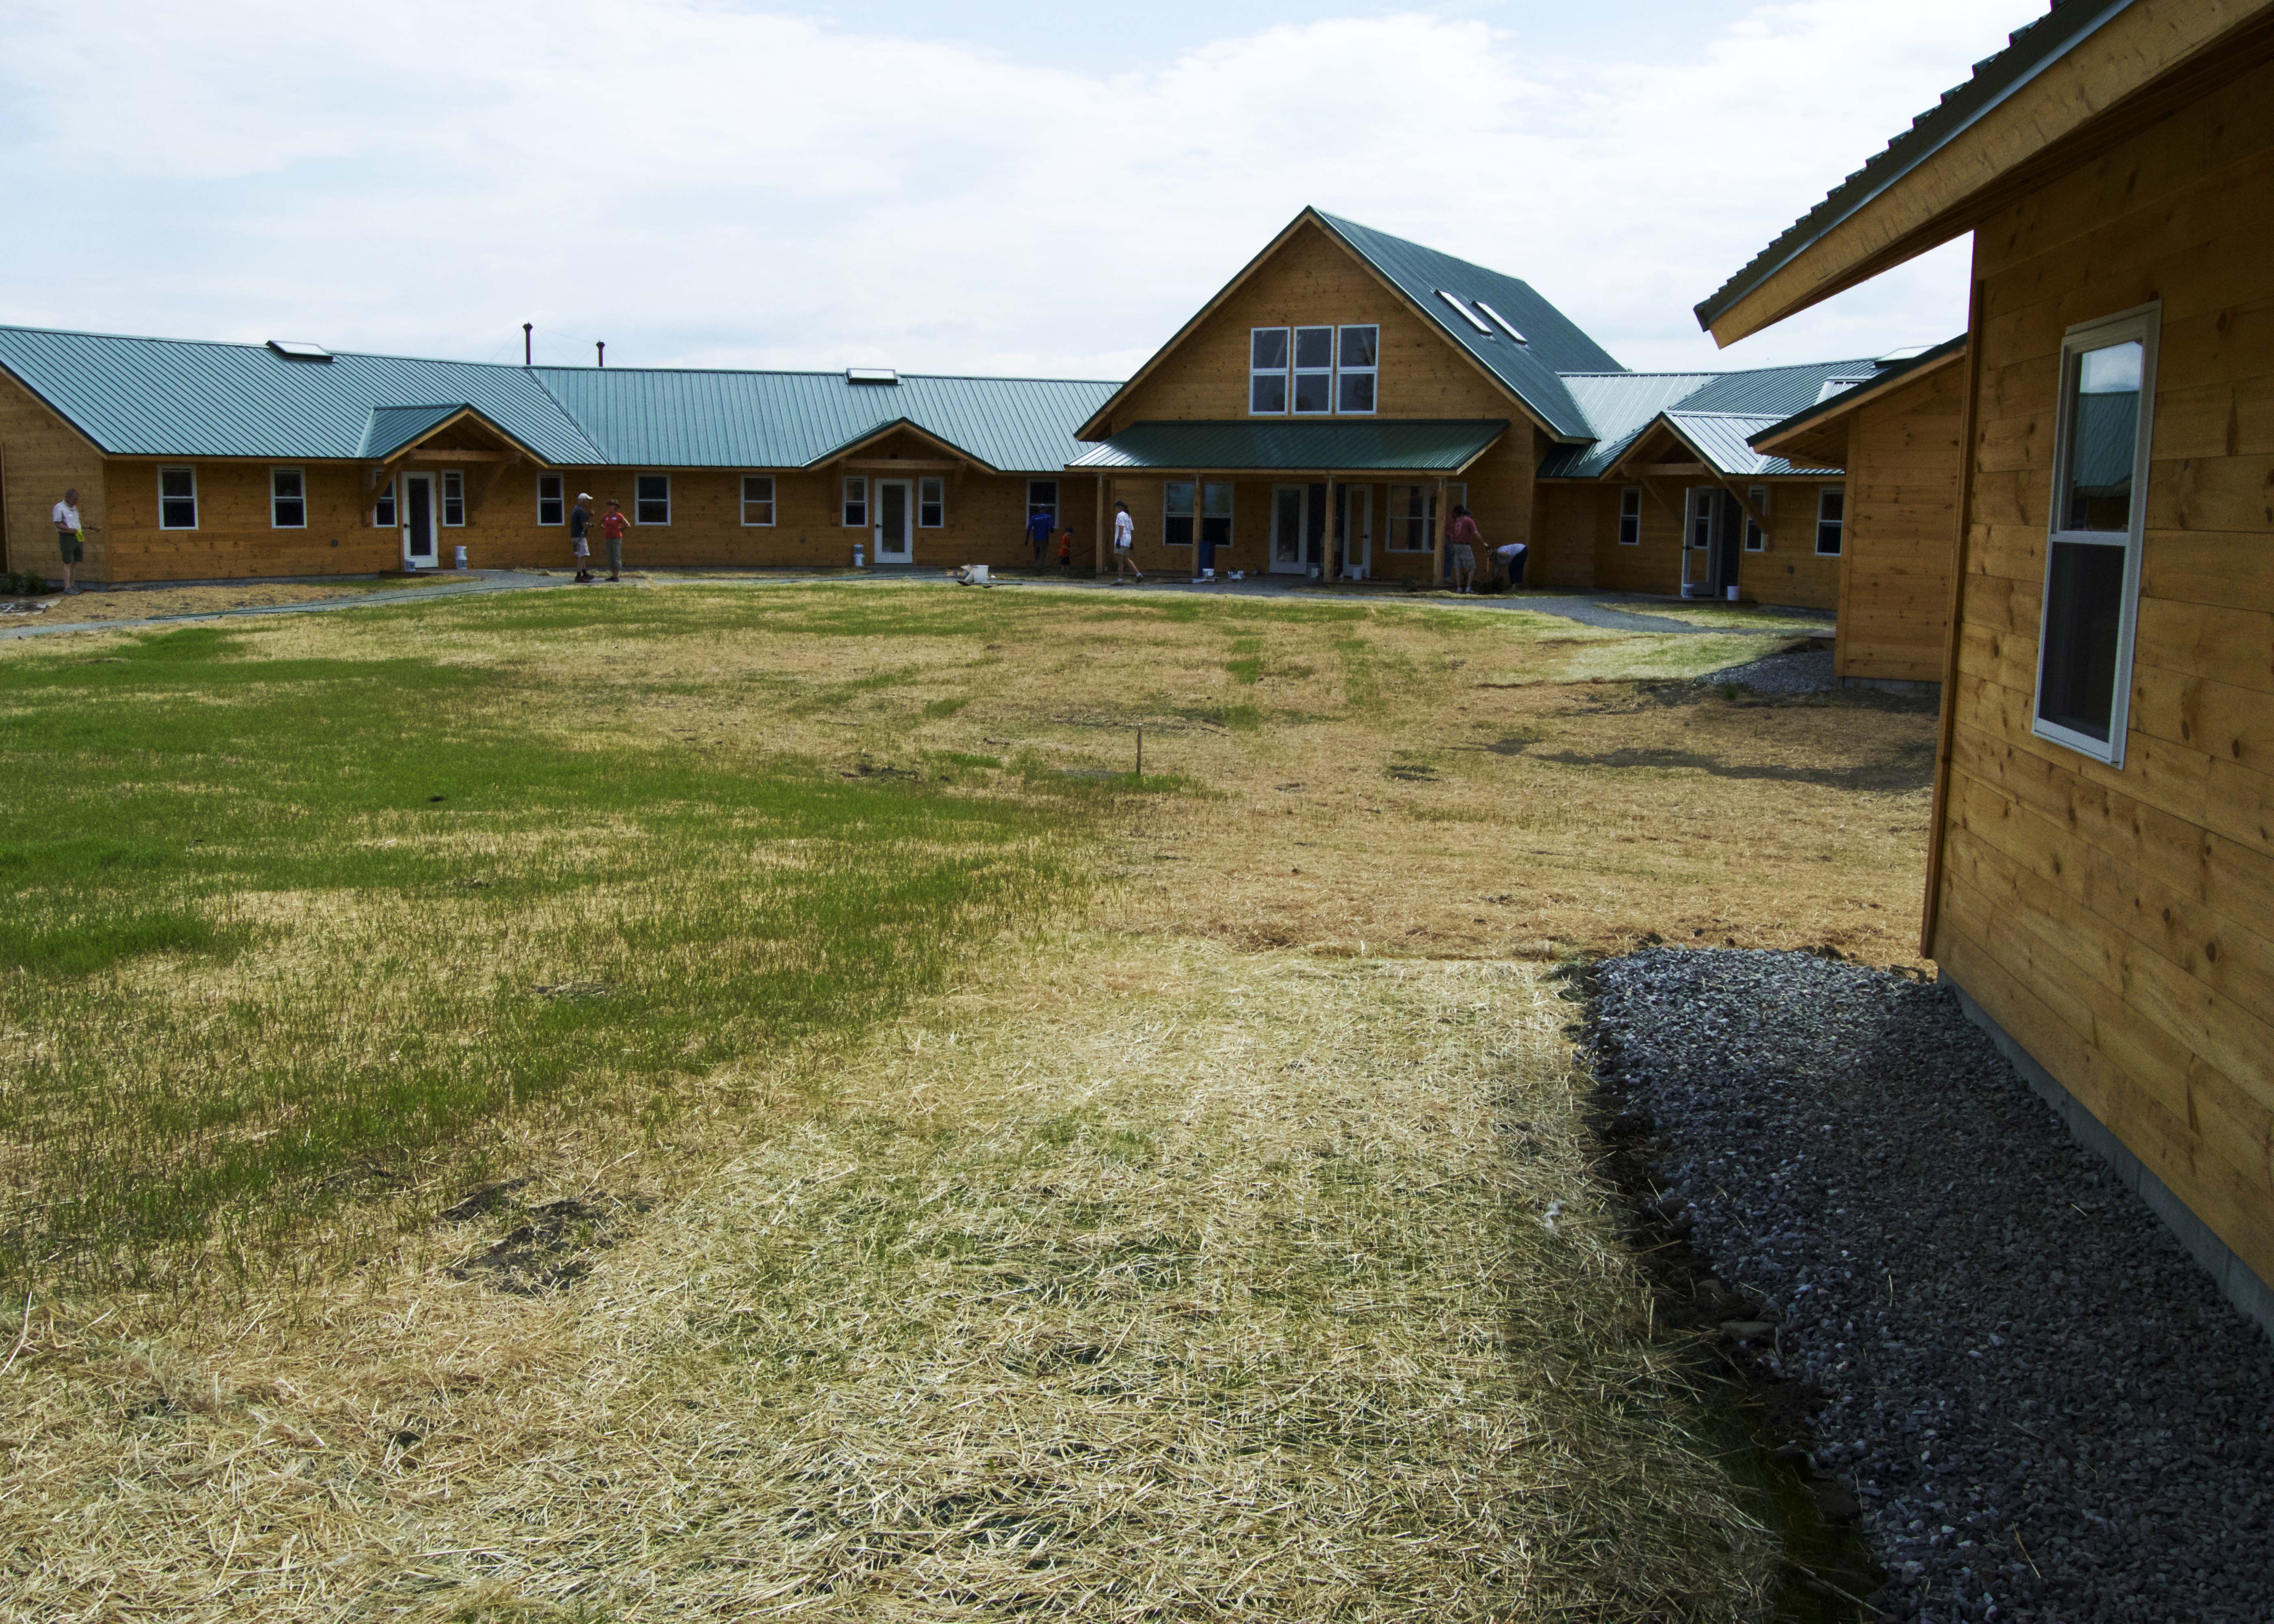 The new dorm facilities at camp